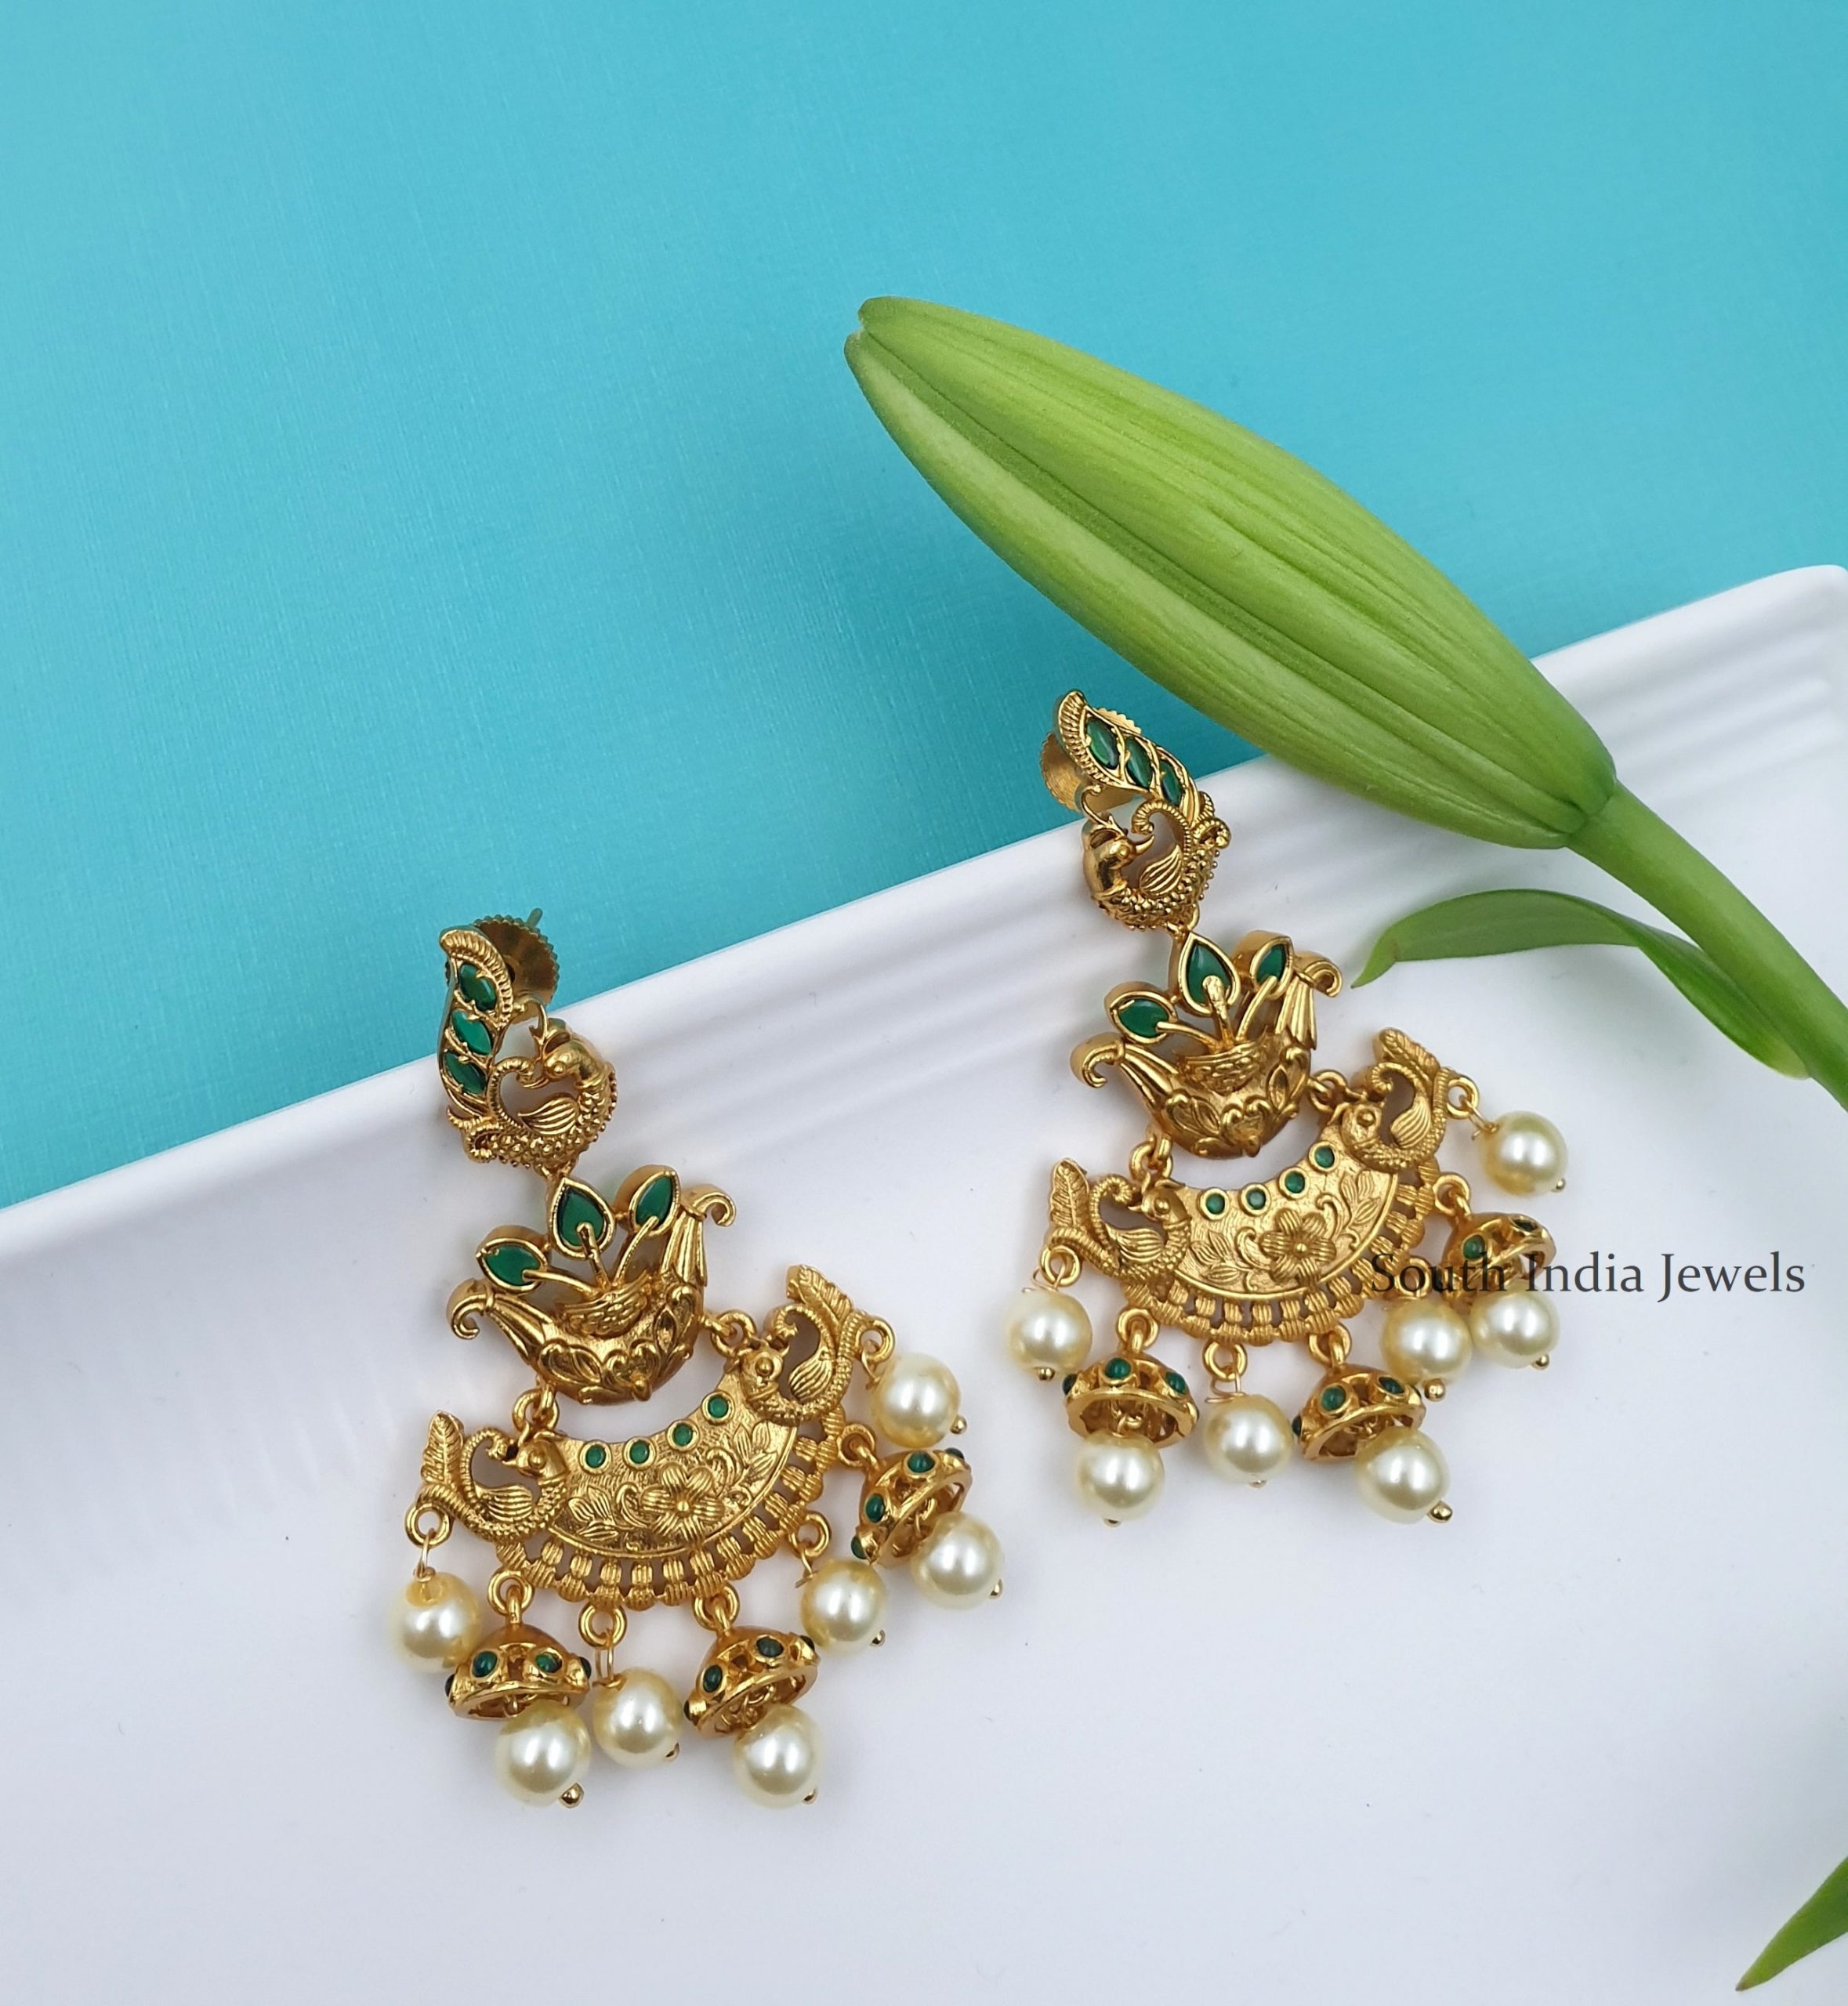 Fabulous Chandbali Peacock Design Earrings